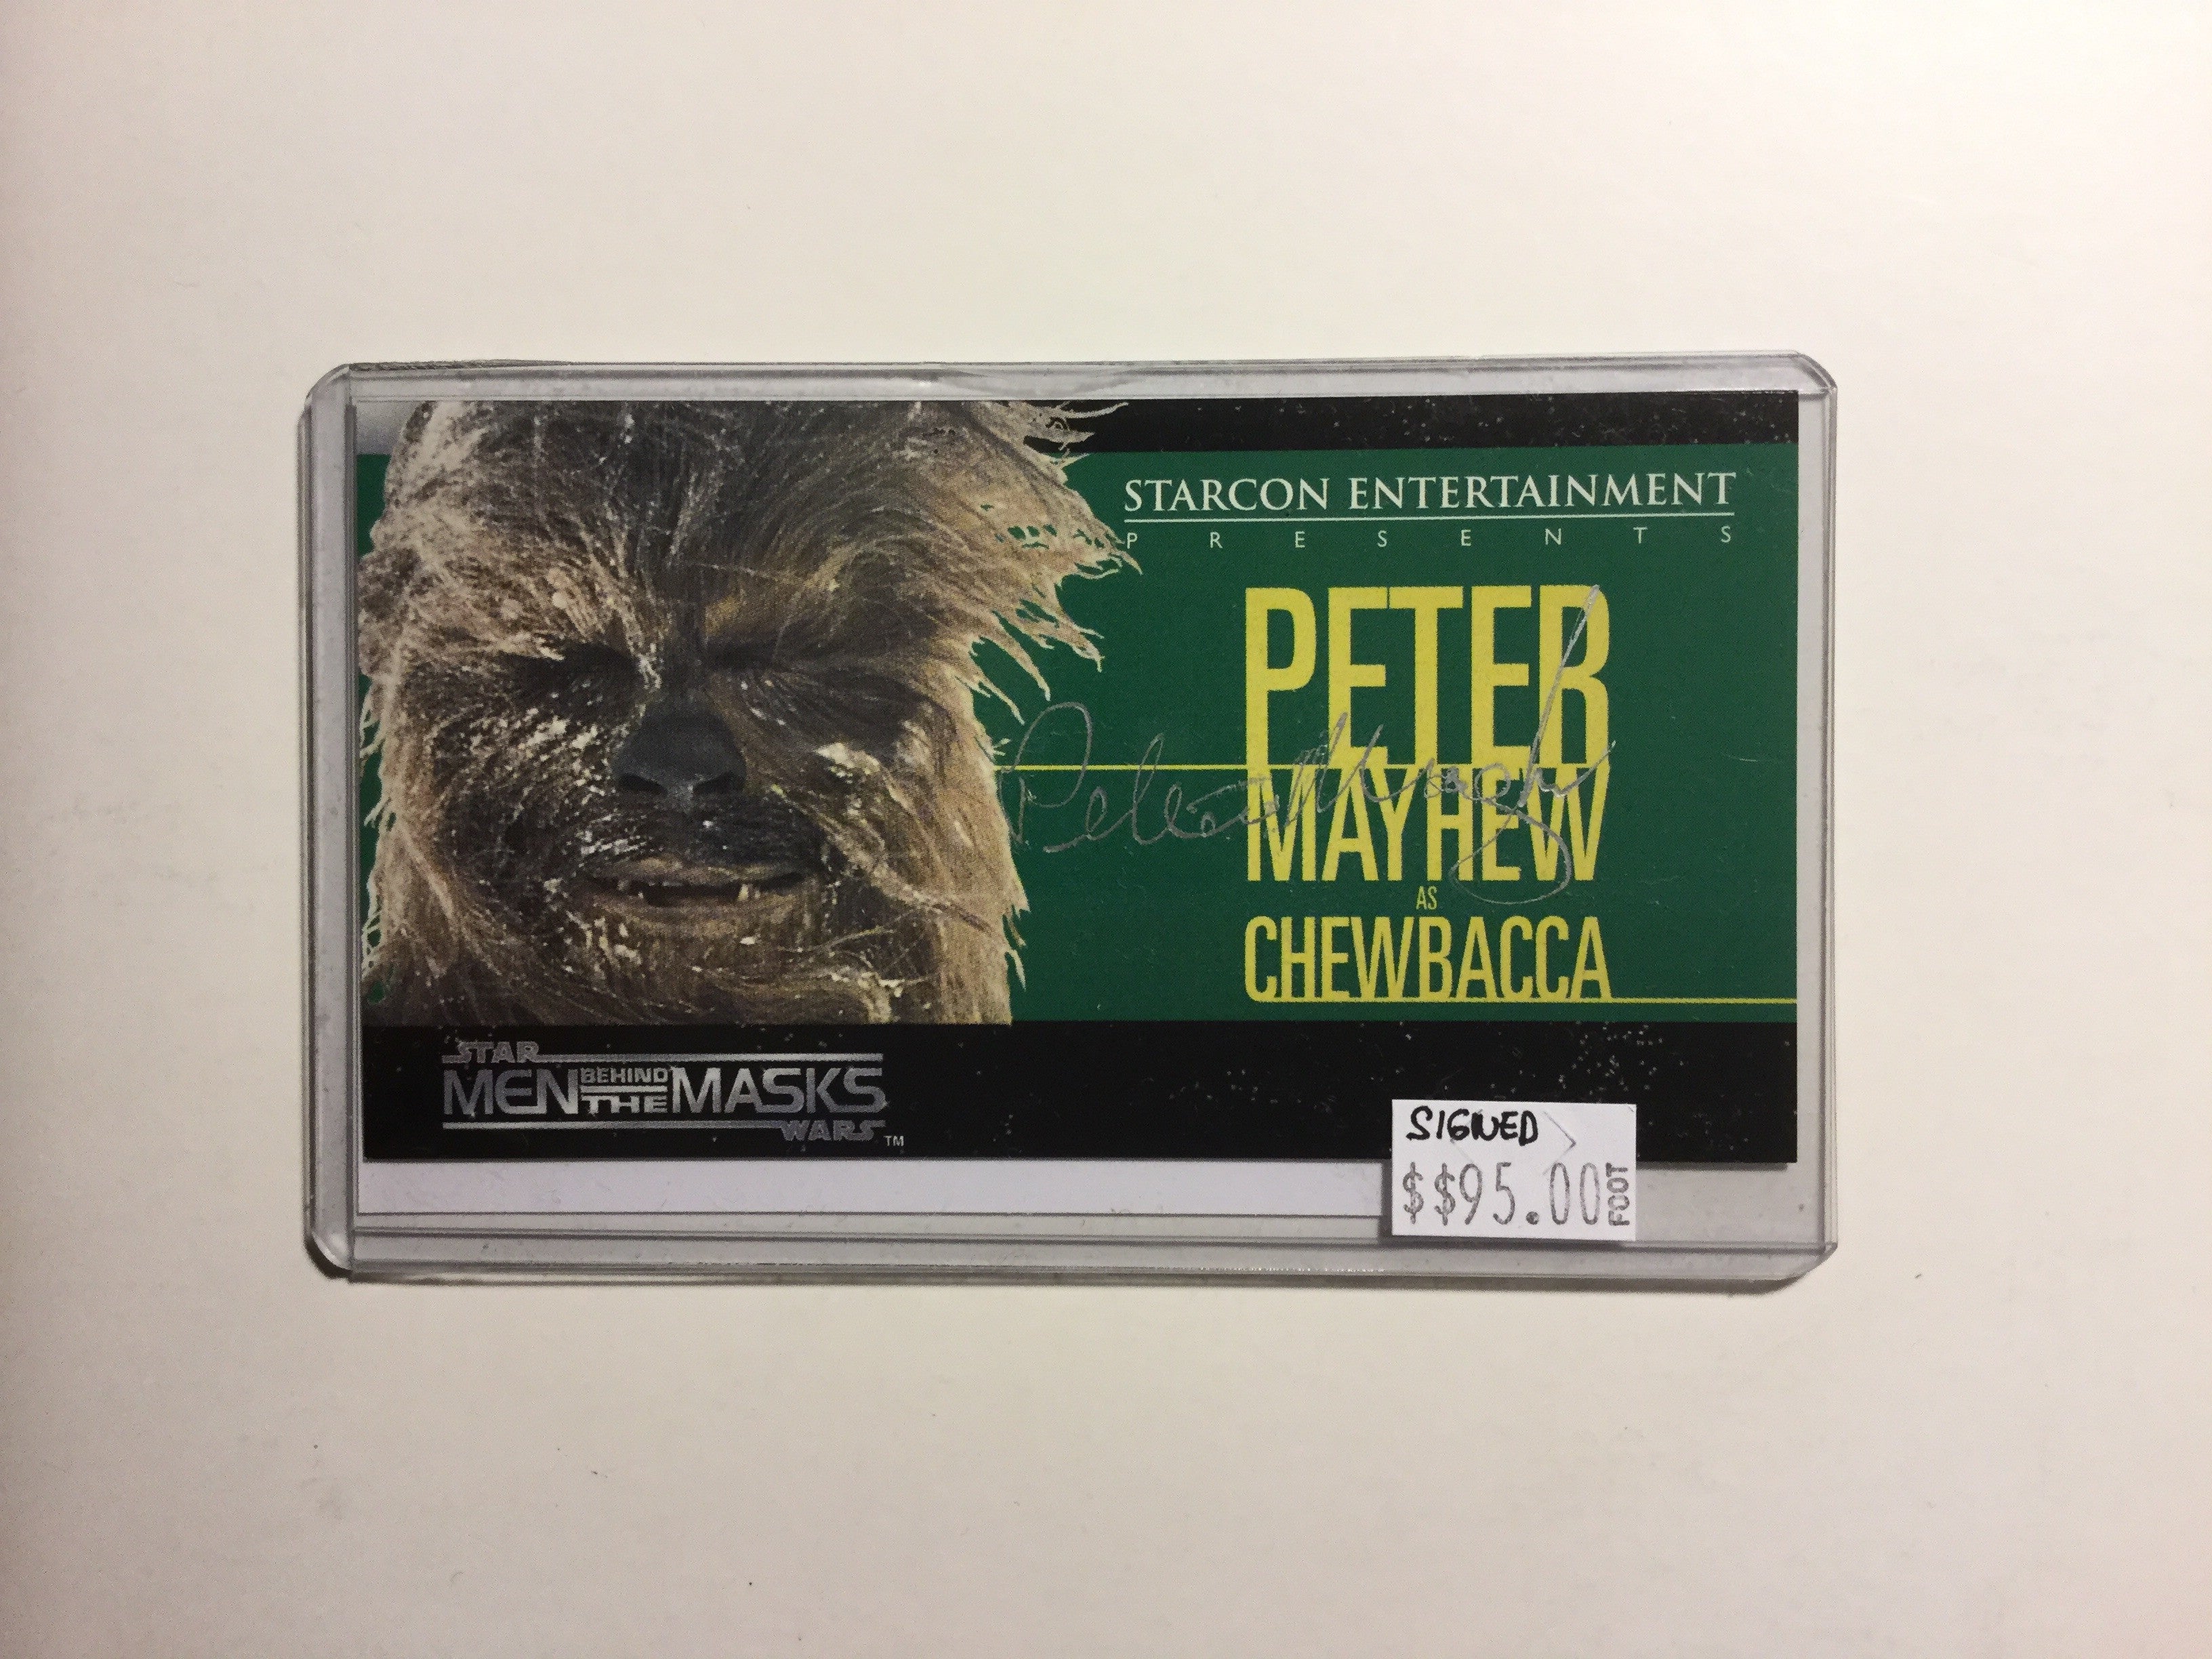 Star Wars Starcon rare foil test chewbacca card 1997